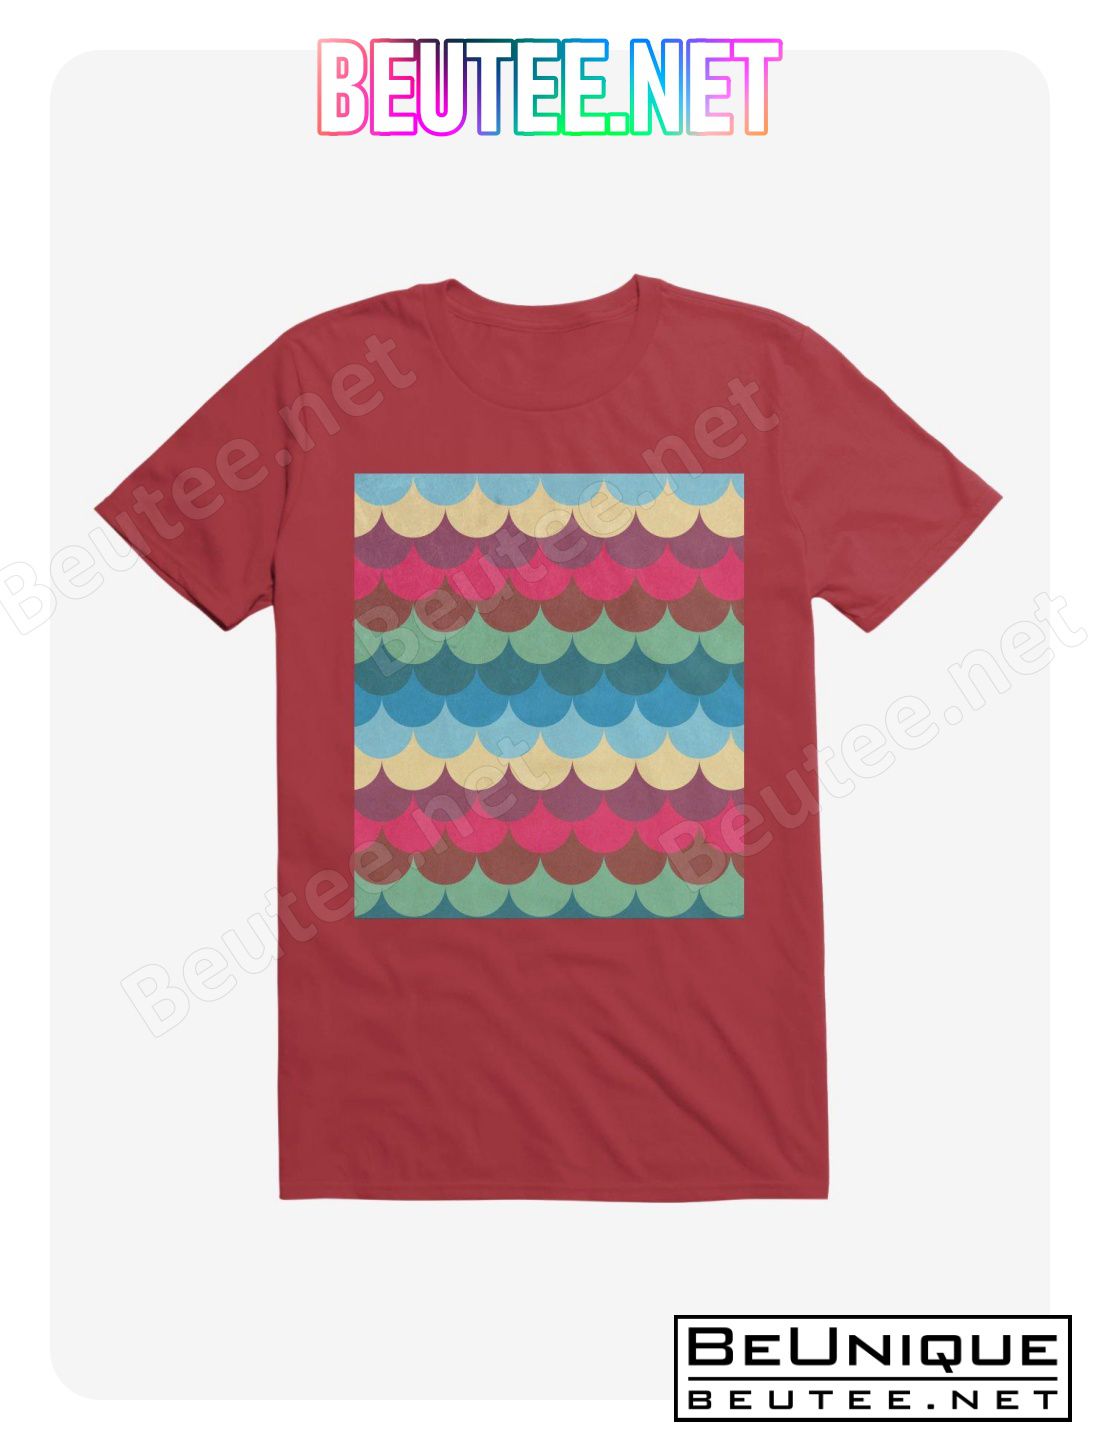 Colorful Mermaid Pattern T-Shirt